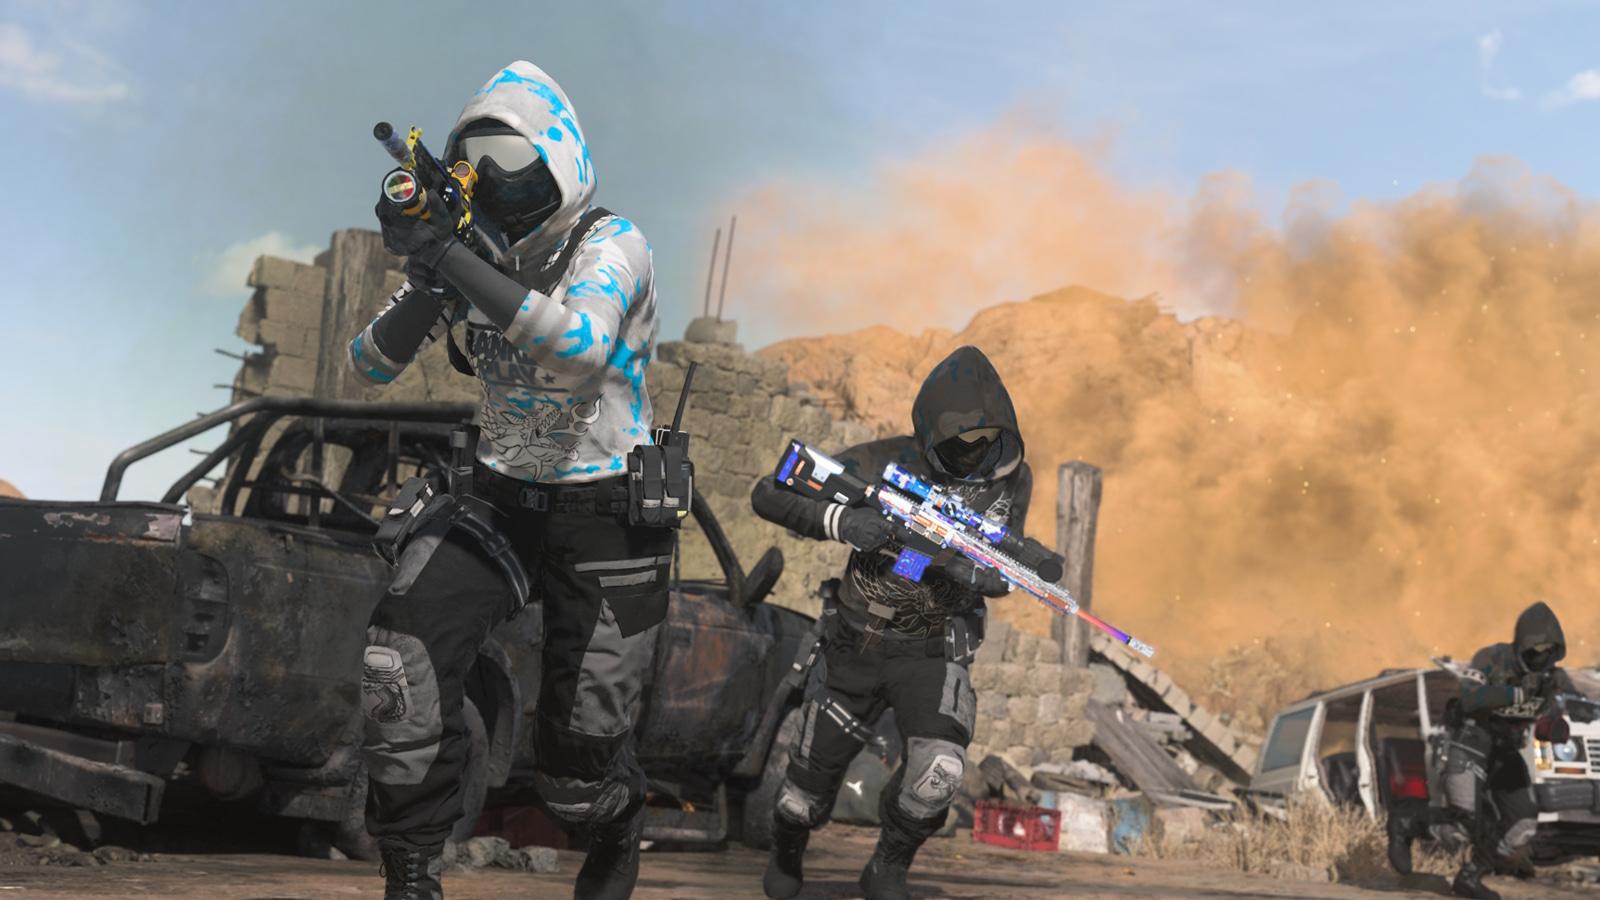 warzone 2 trios squad running through al mazrah desert wearing competitive operator skins.